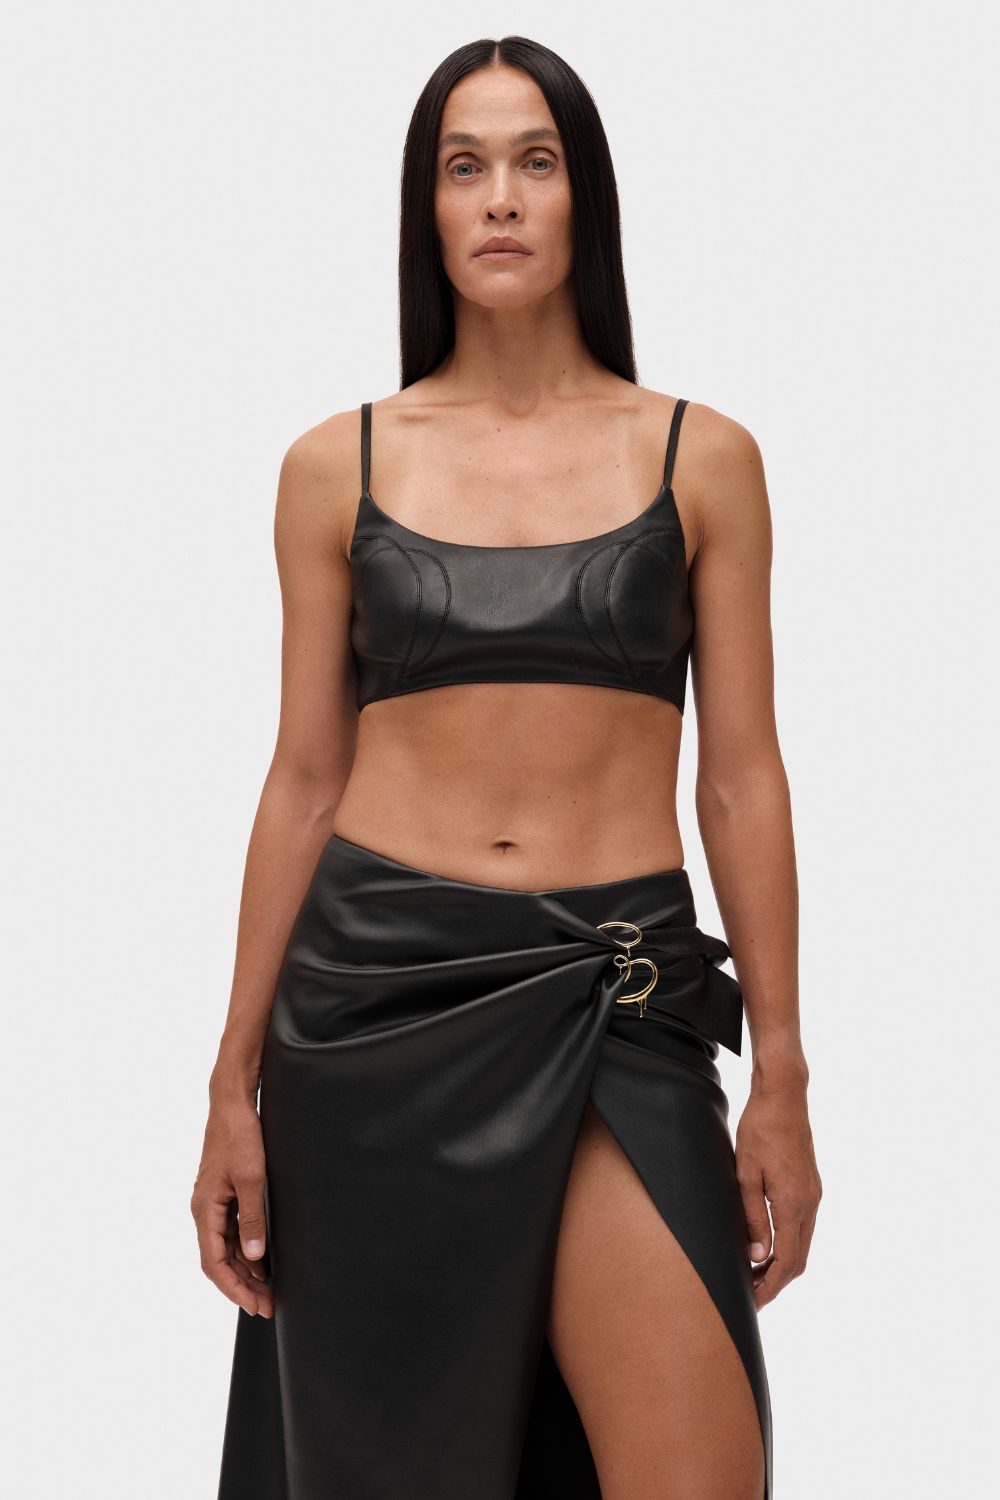 Eco-Leather skirt